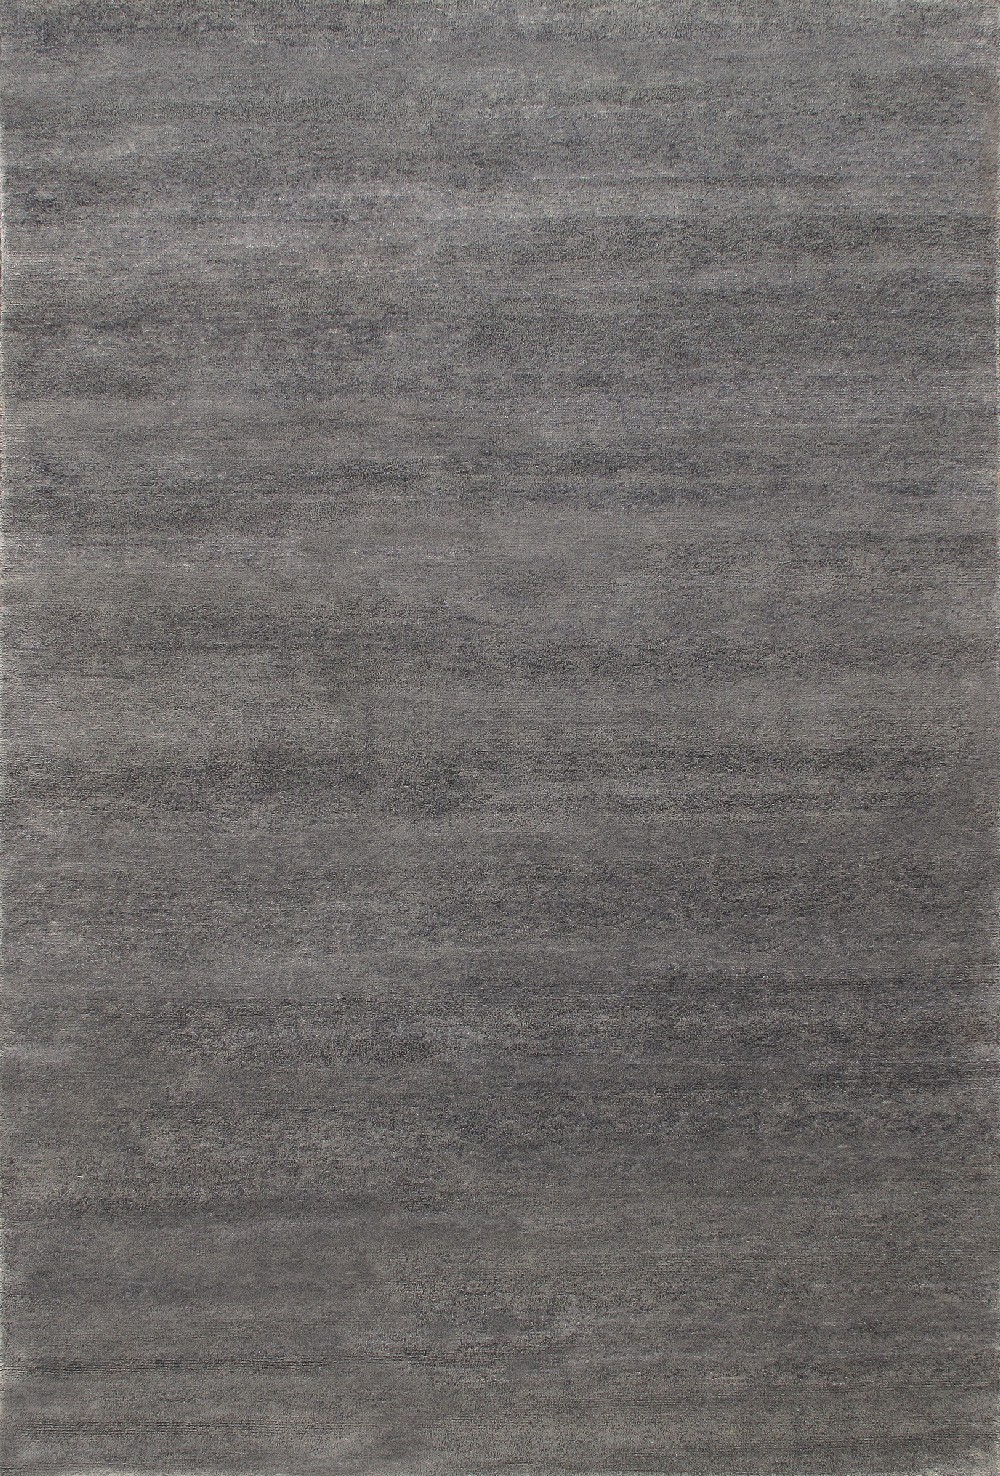 silk rug texture rugsville tibetan plain textured wool u0026 silk 13151 rug dark grey , OSFGNPY